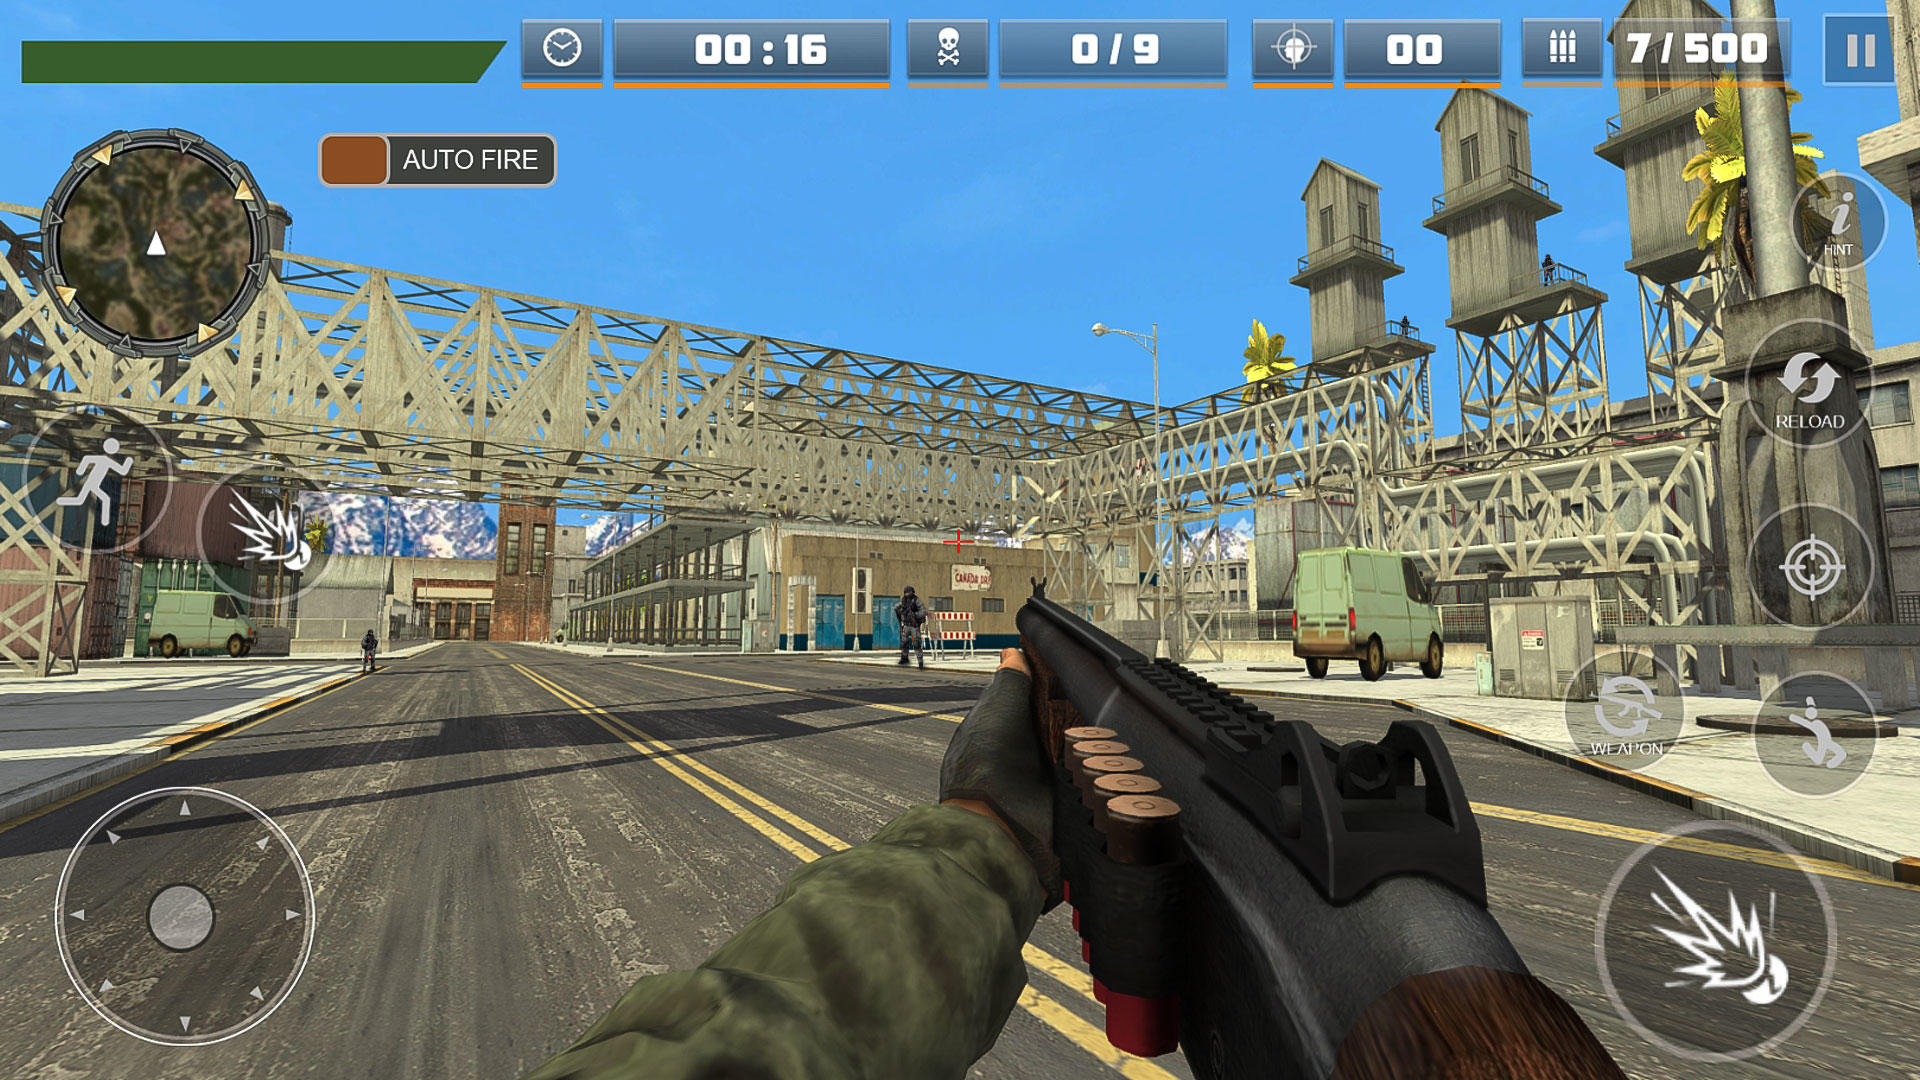 Gun Games Offline, FPS Shooting Games - Free Gun Games, Shoot To Kill -  Sniper Mission 3D